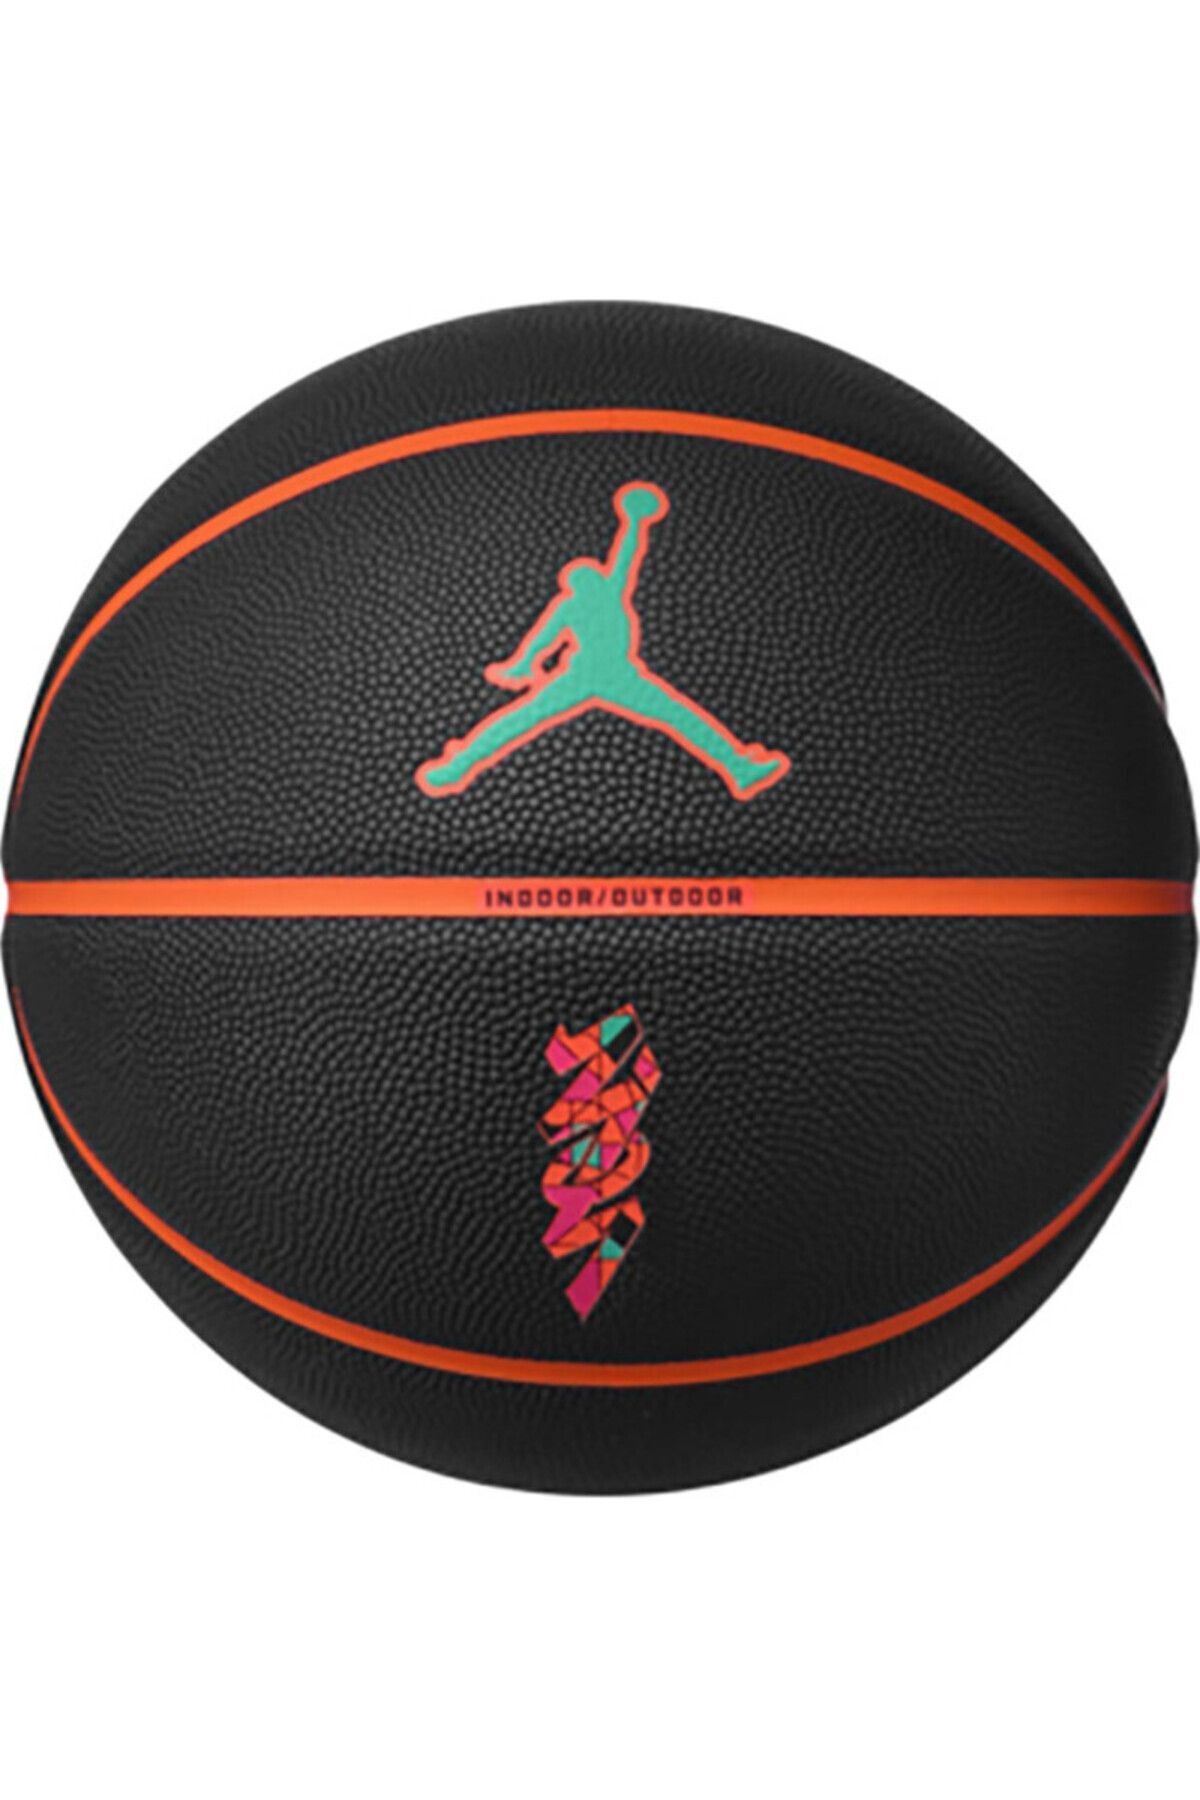 Nike Jordan All Court WILLIAMSON DEFLATED Basketbol Topu